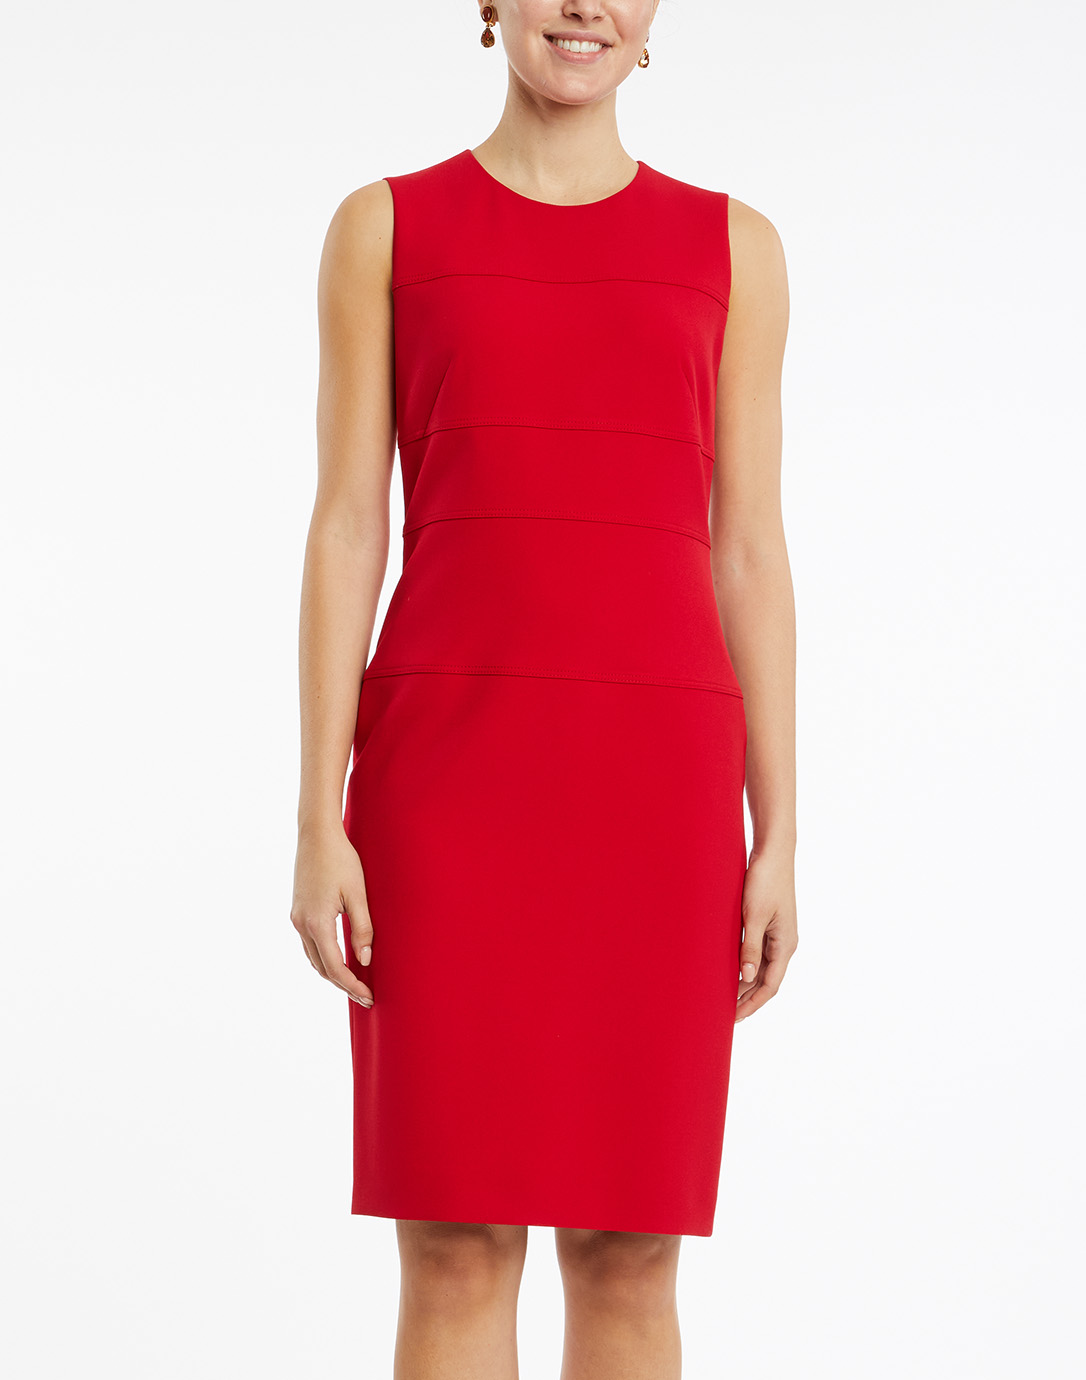 Dacriba Red Stretch Sheath Dress | BOSS 